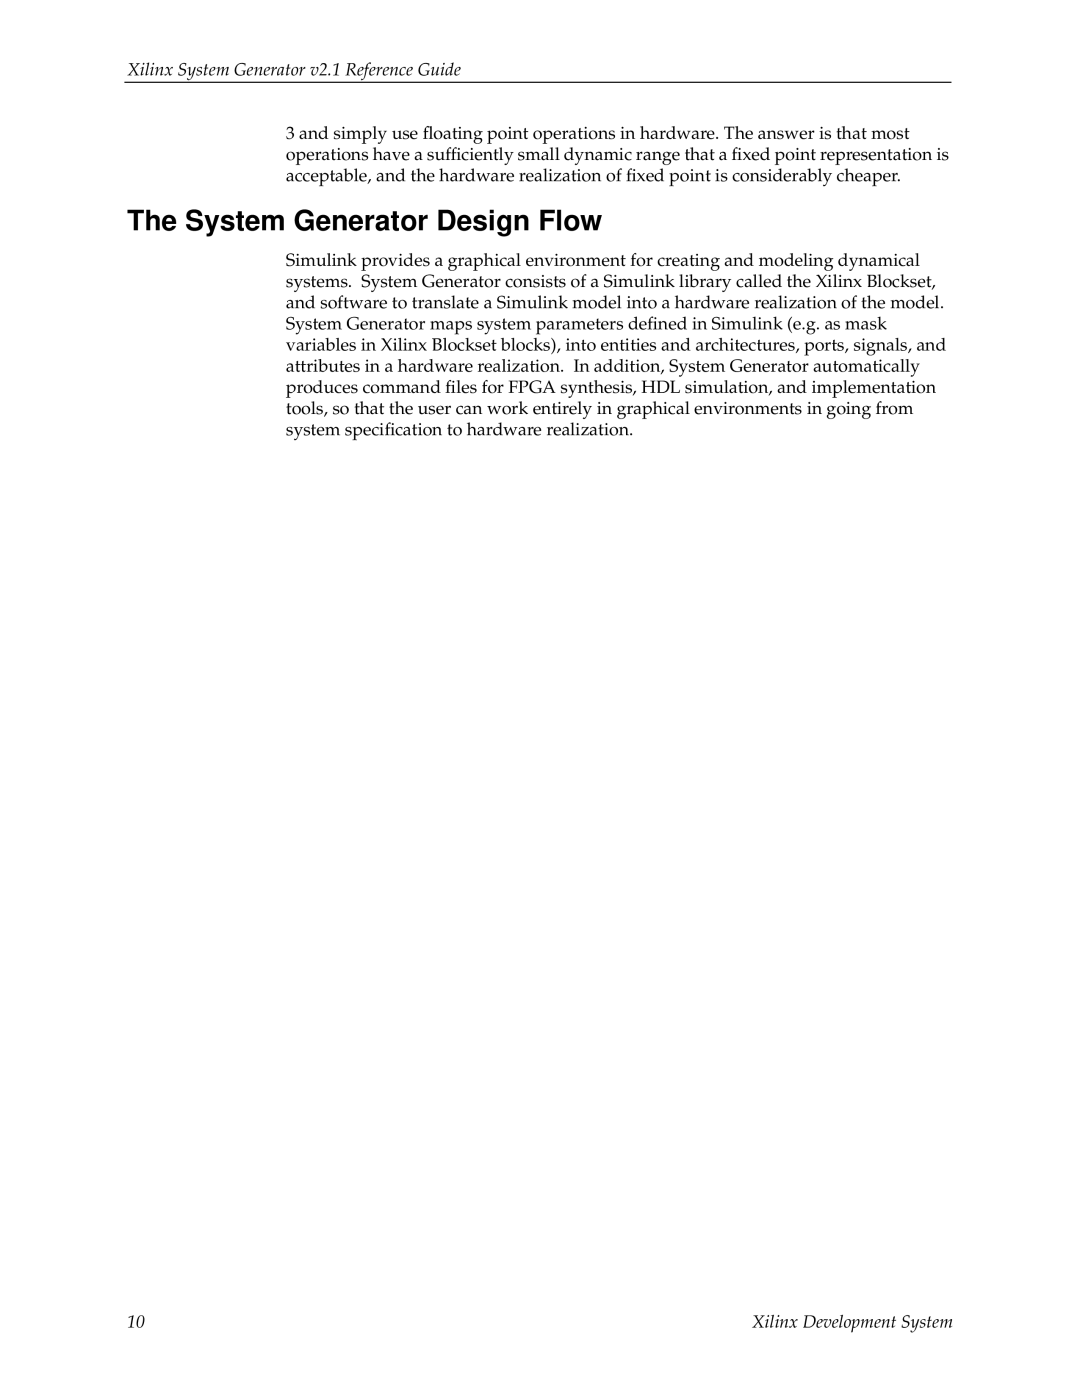 Xilinx V2.1 The System Generator Design Flow, Xilinx System Generator v2.1 Reference Guide, Xilinx Development System 